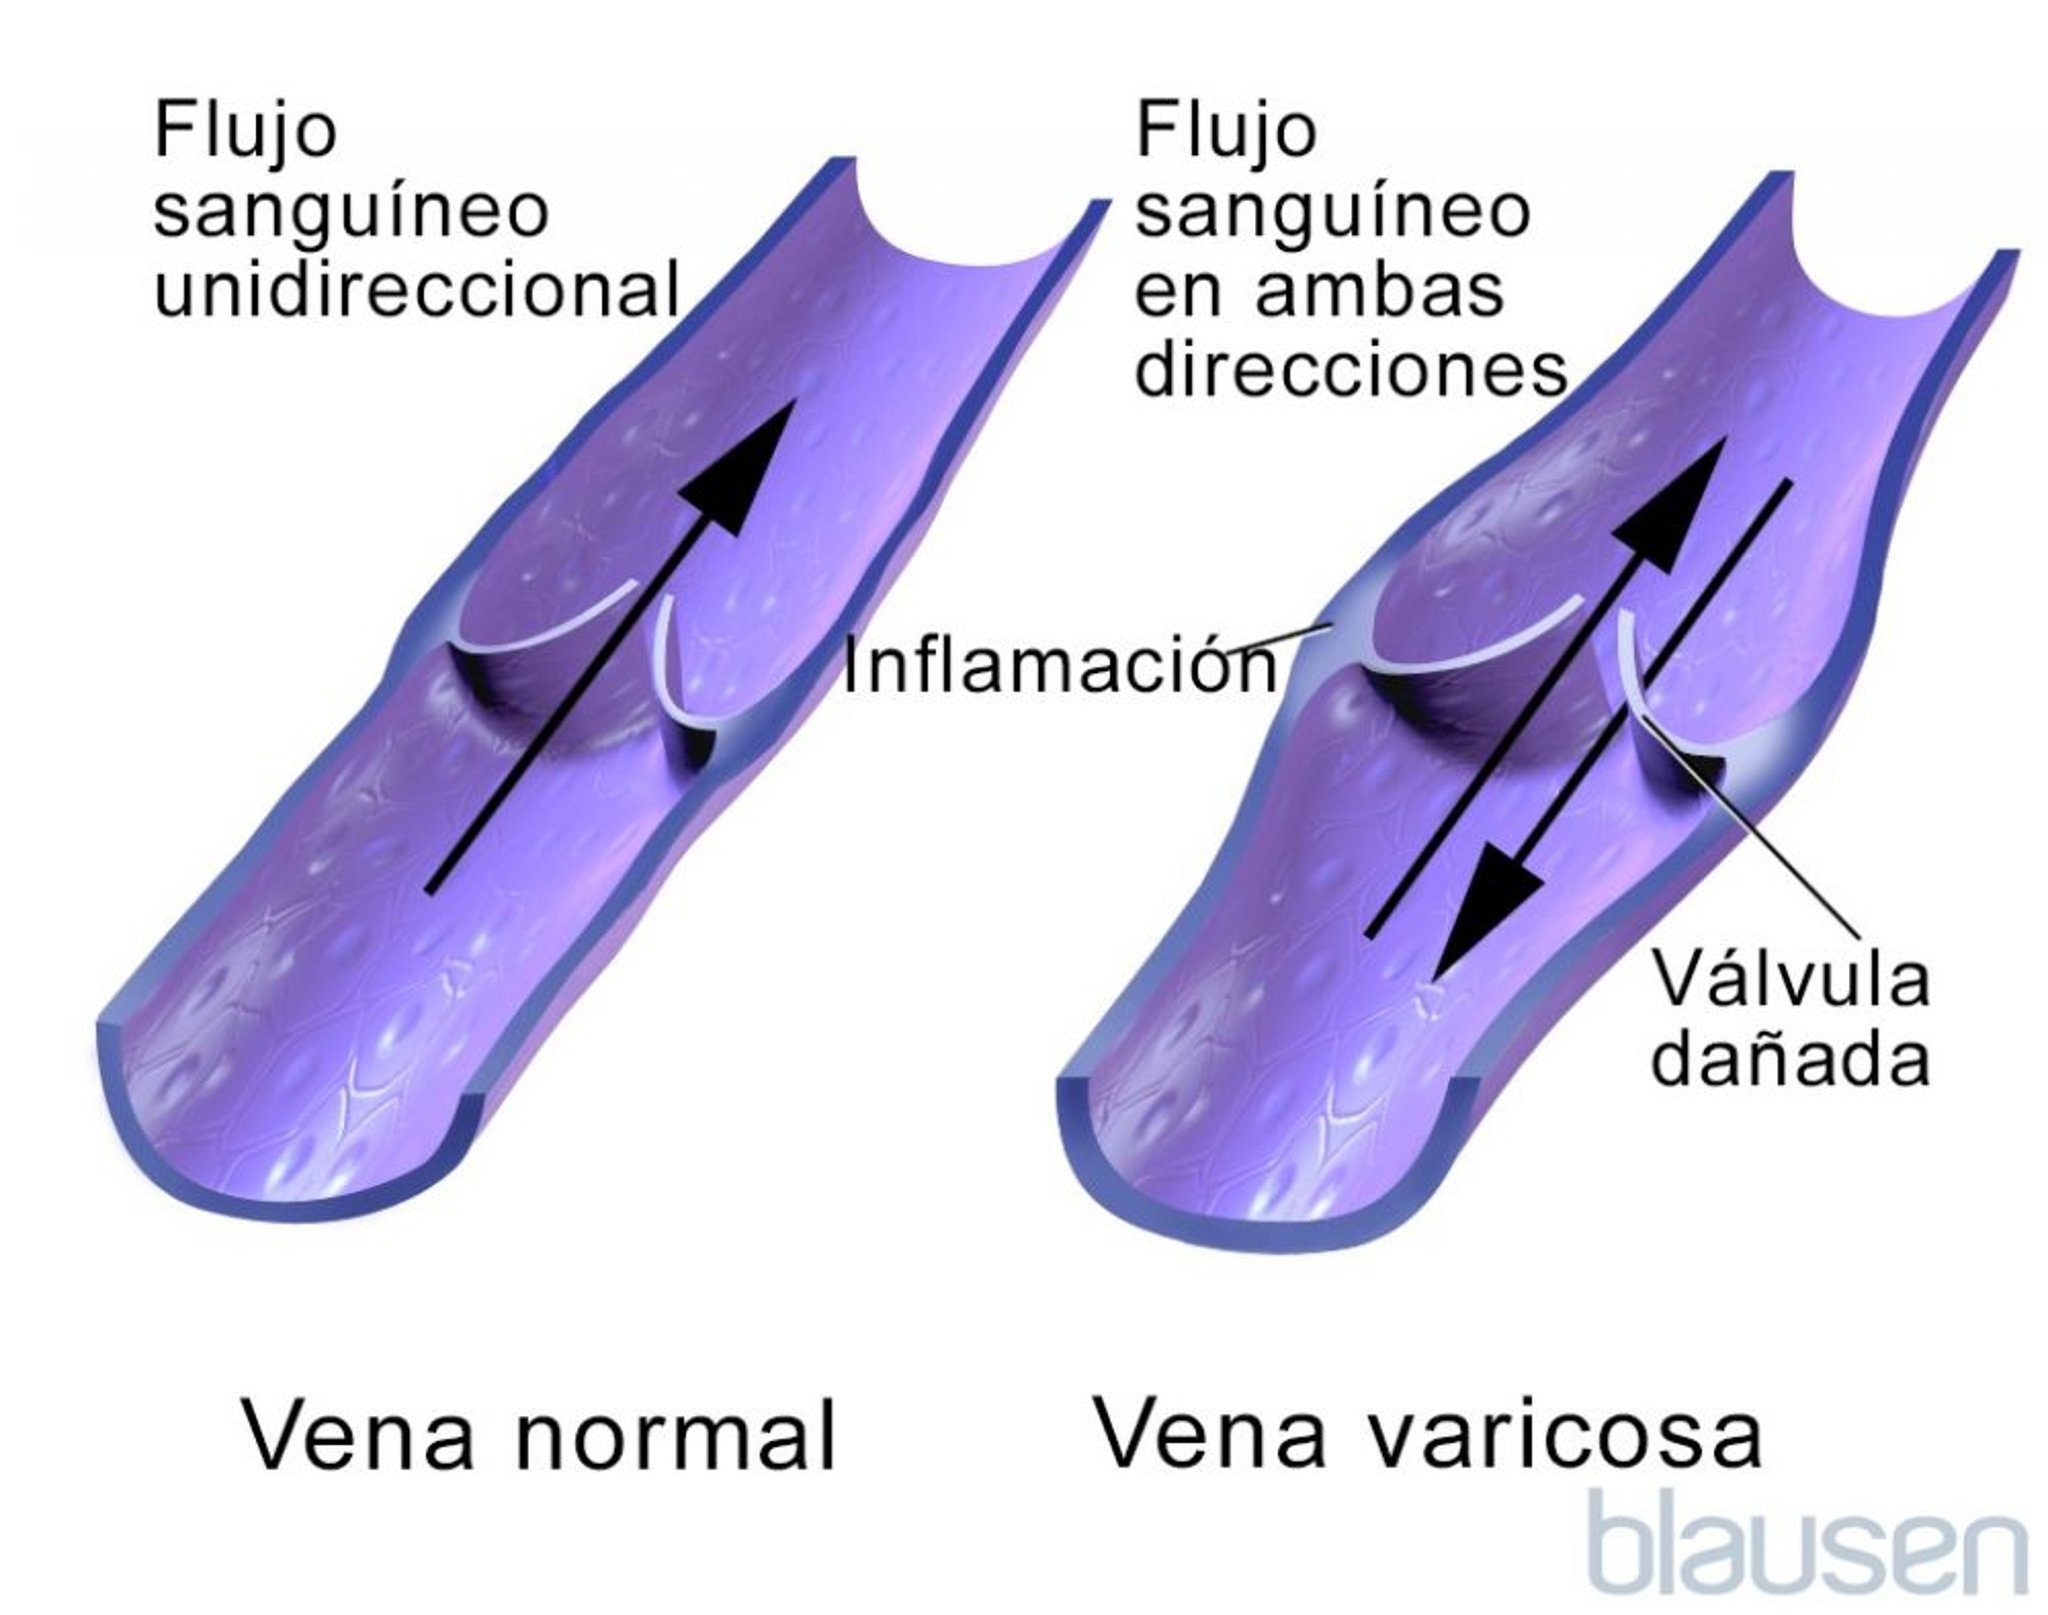 Flujo sanguíneo en las venas varicosas